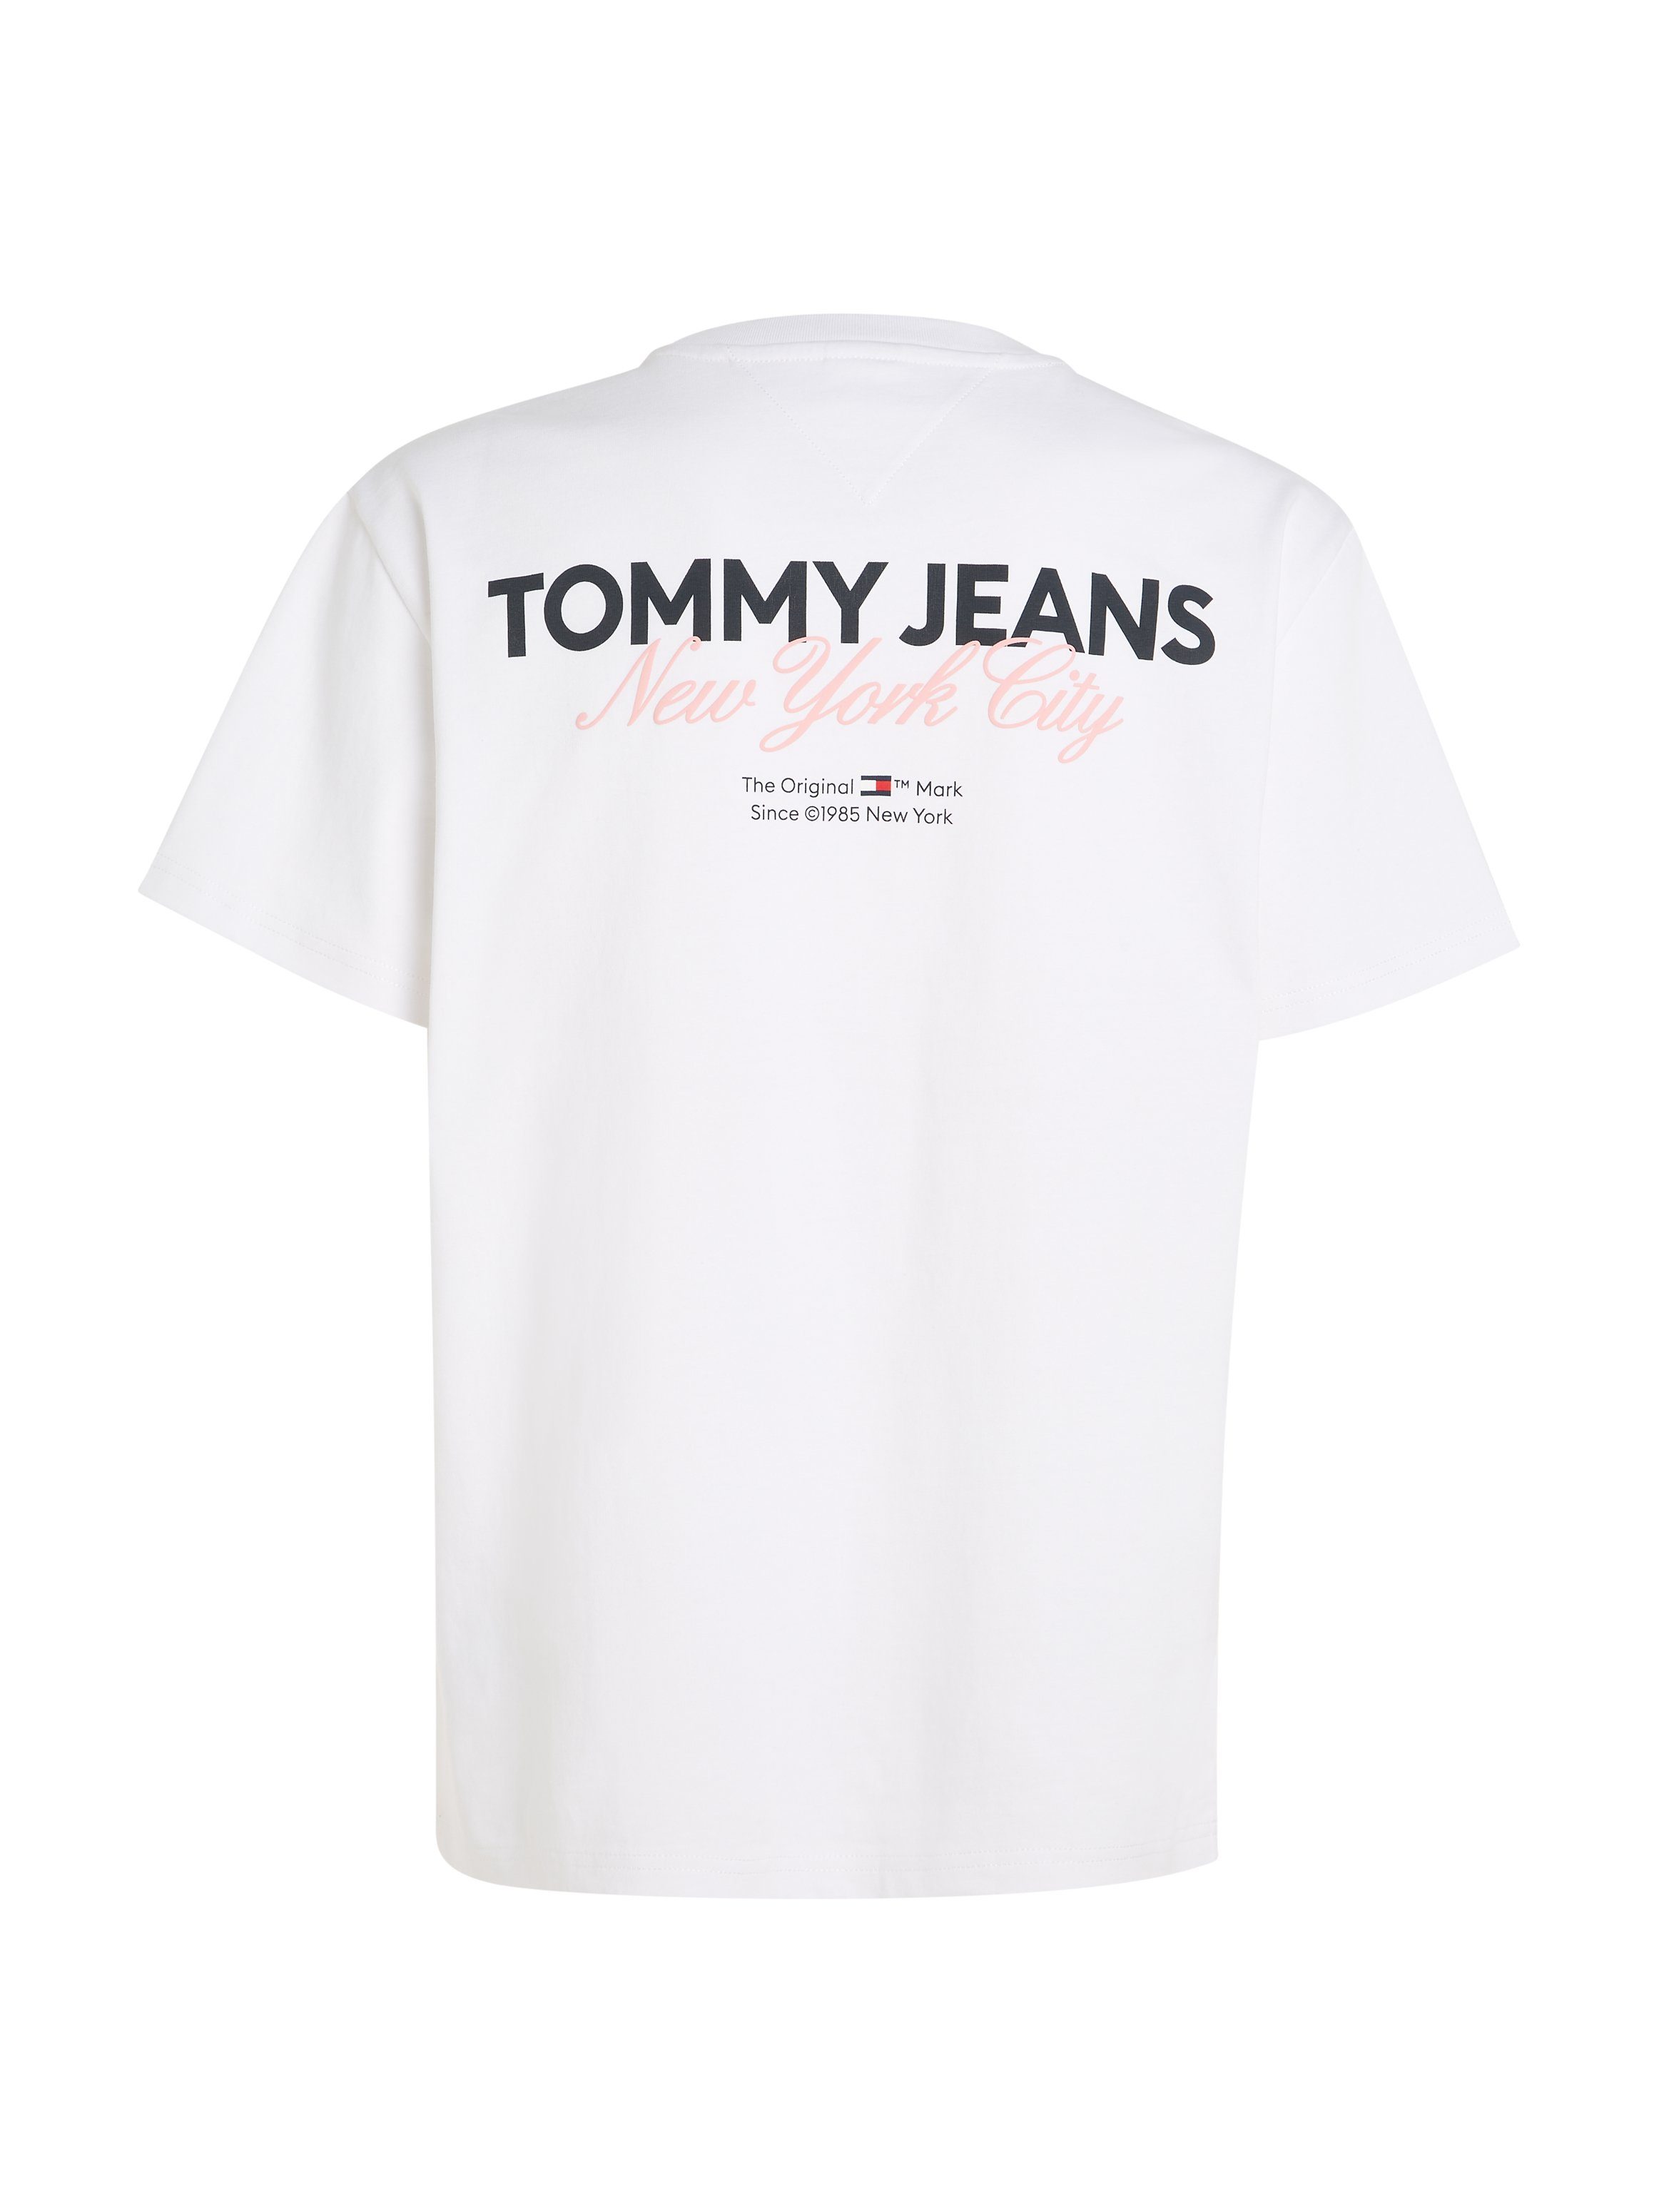 POP NYC COLOR REG Jeans T-Shirt TJM White TJ Tommy TEE